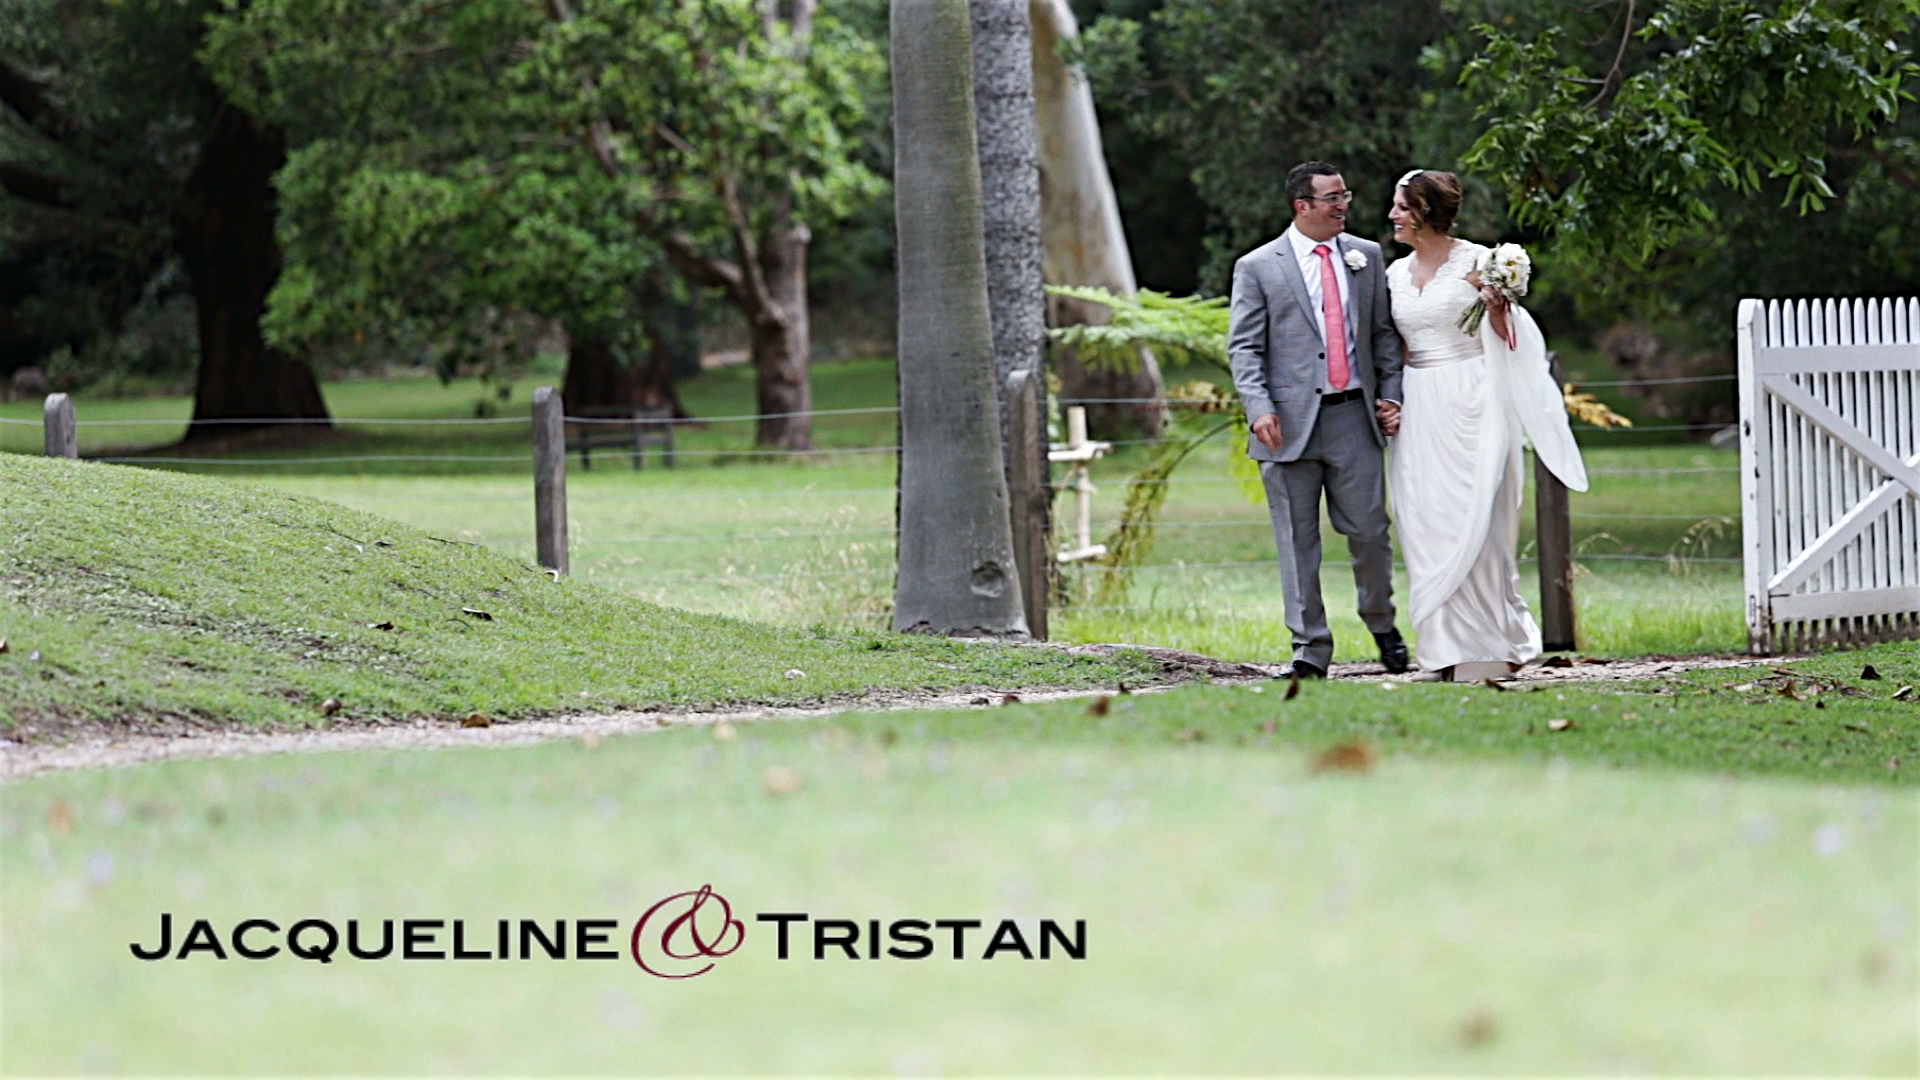 Jacqueline & Tristan’s Wedding, November 16, 2013